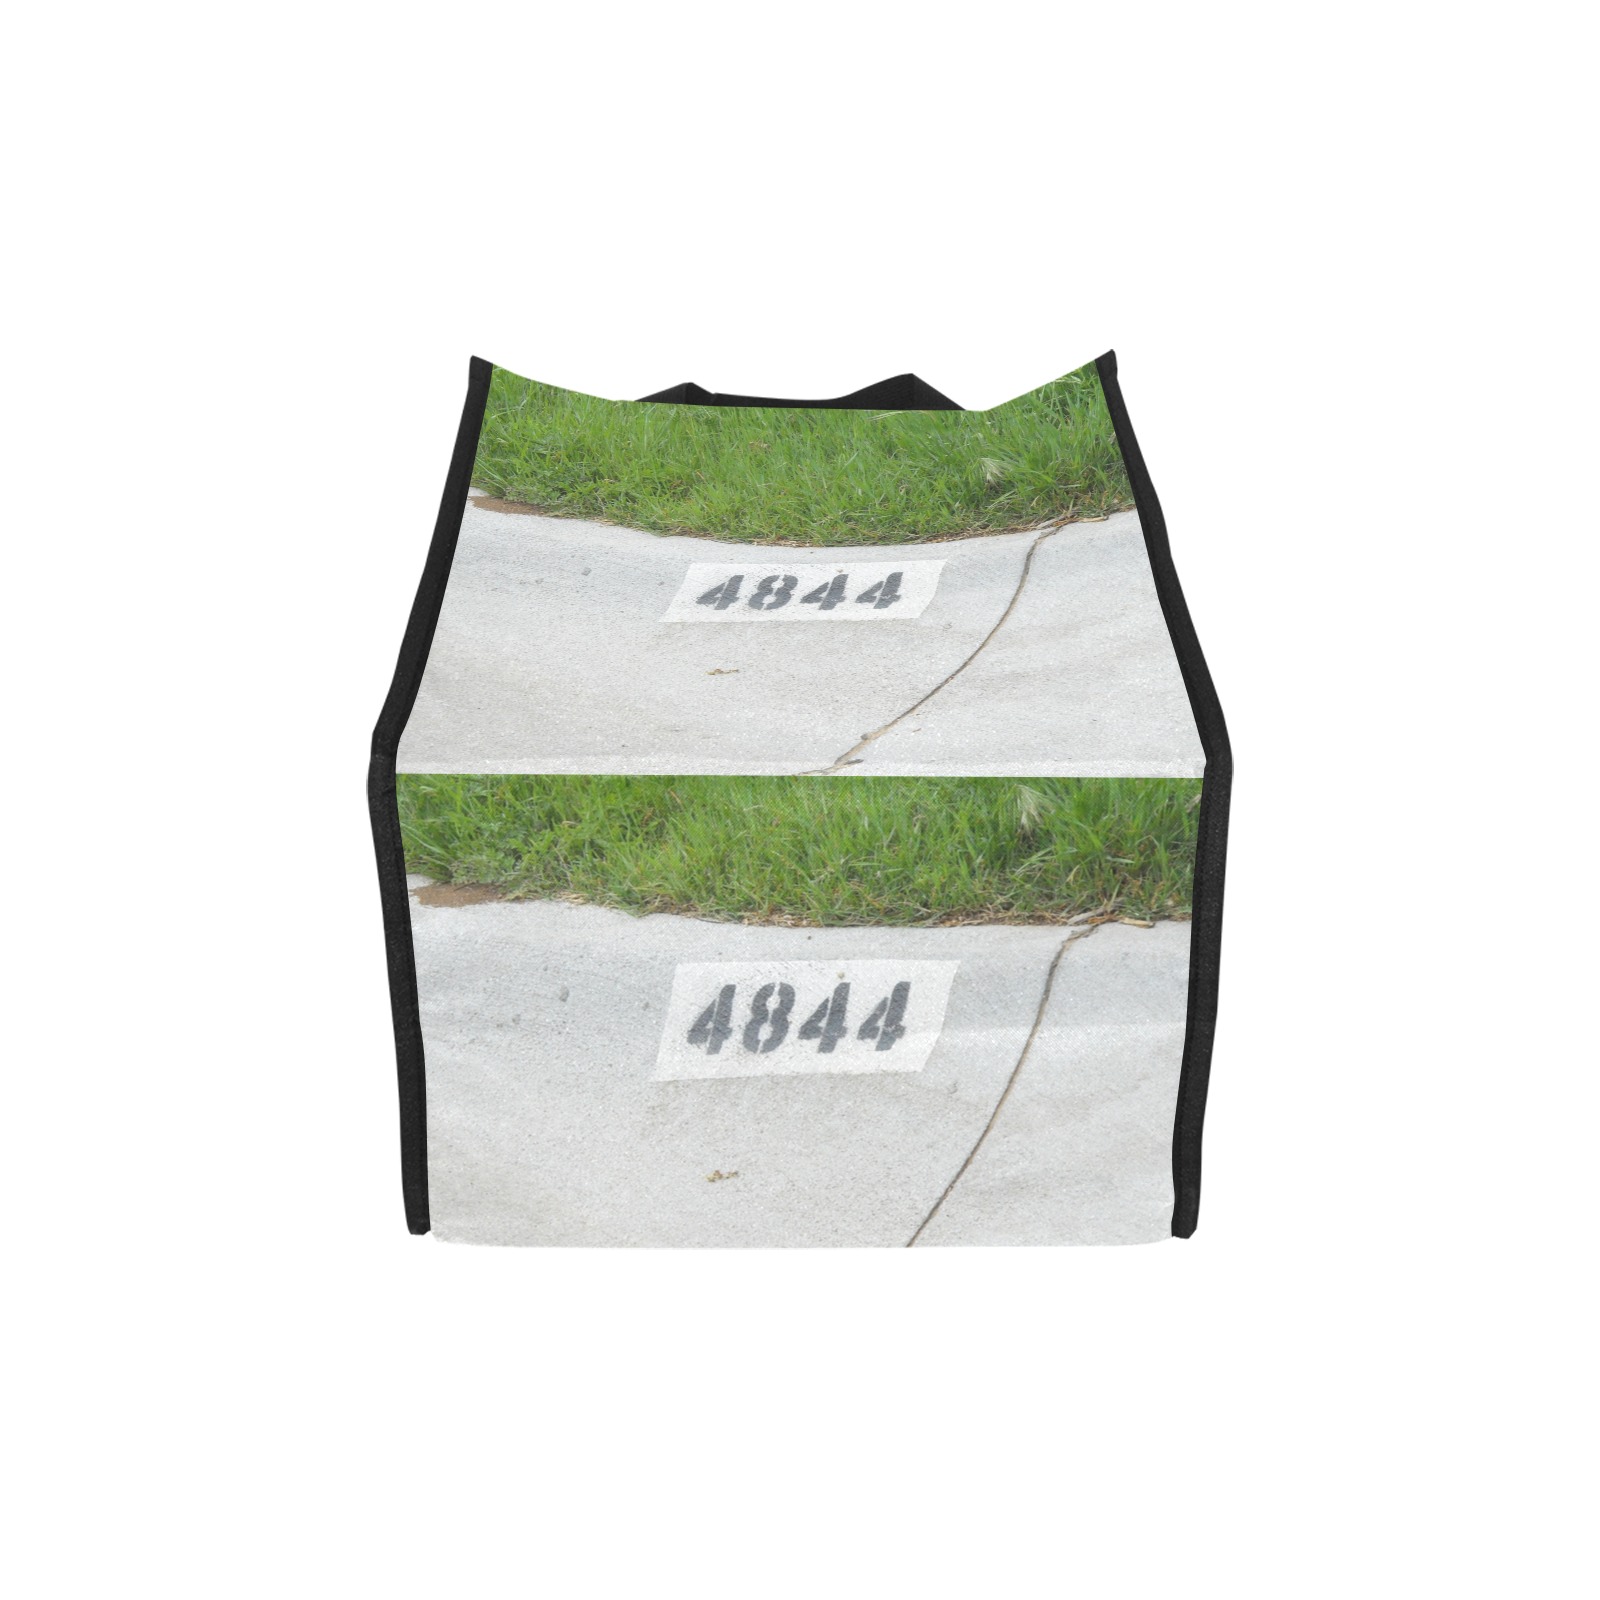 Street Number 4844 Picnic Tote Bag (Model 1717)